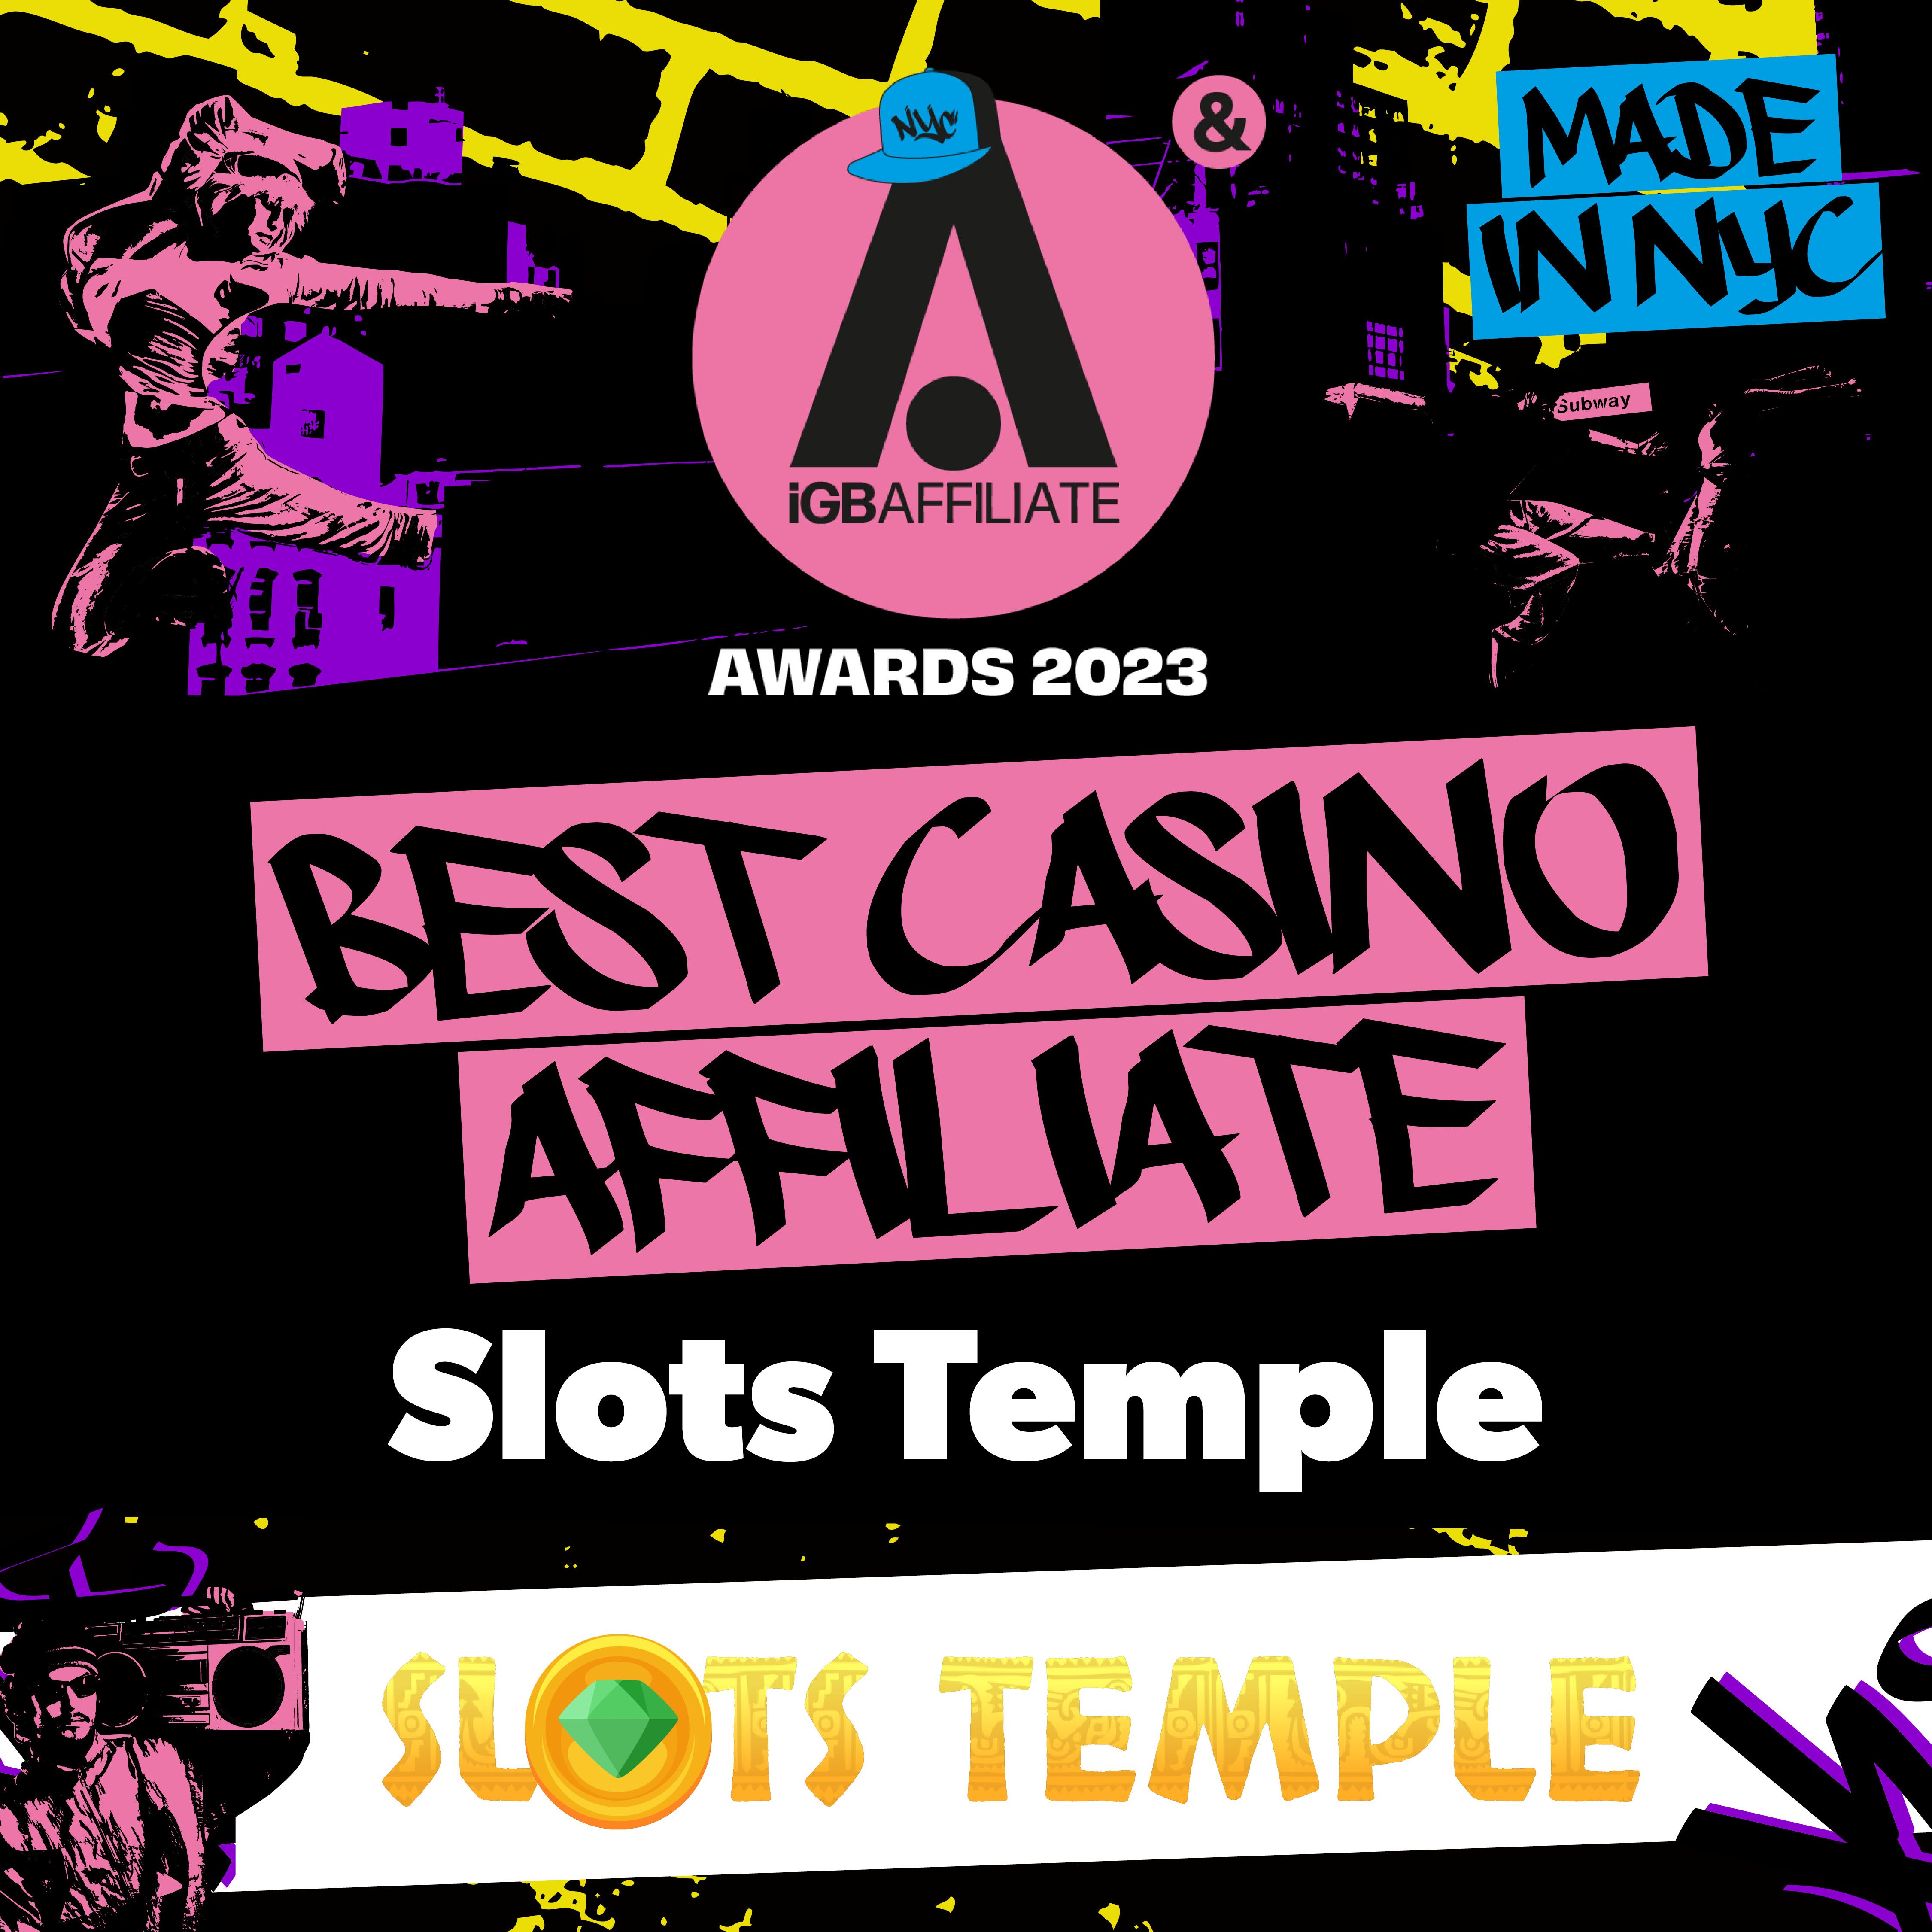 Slots Temple winner